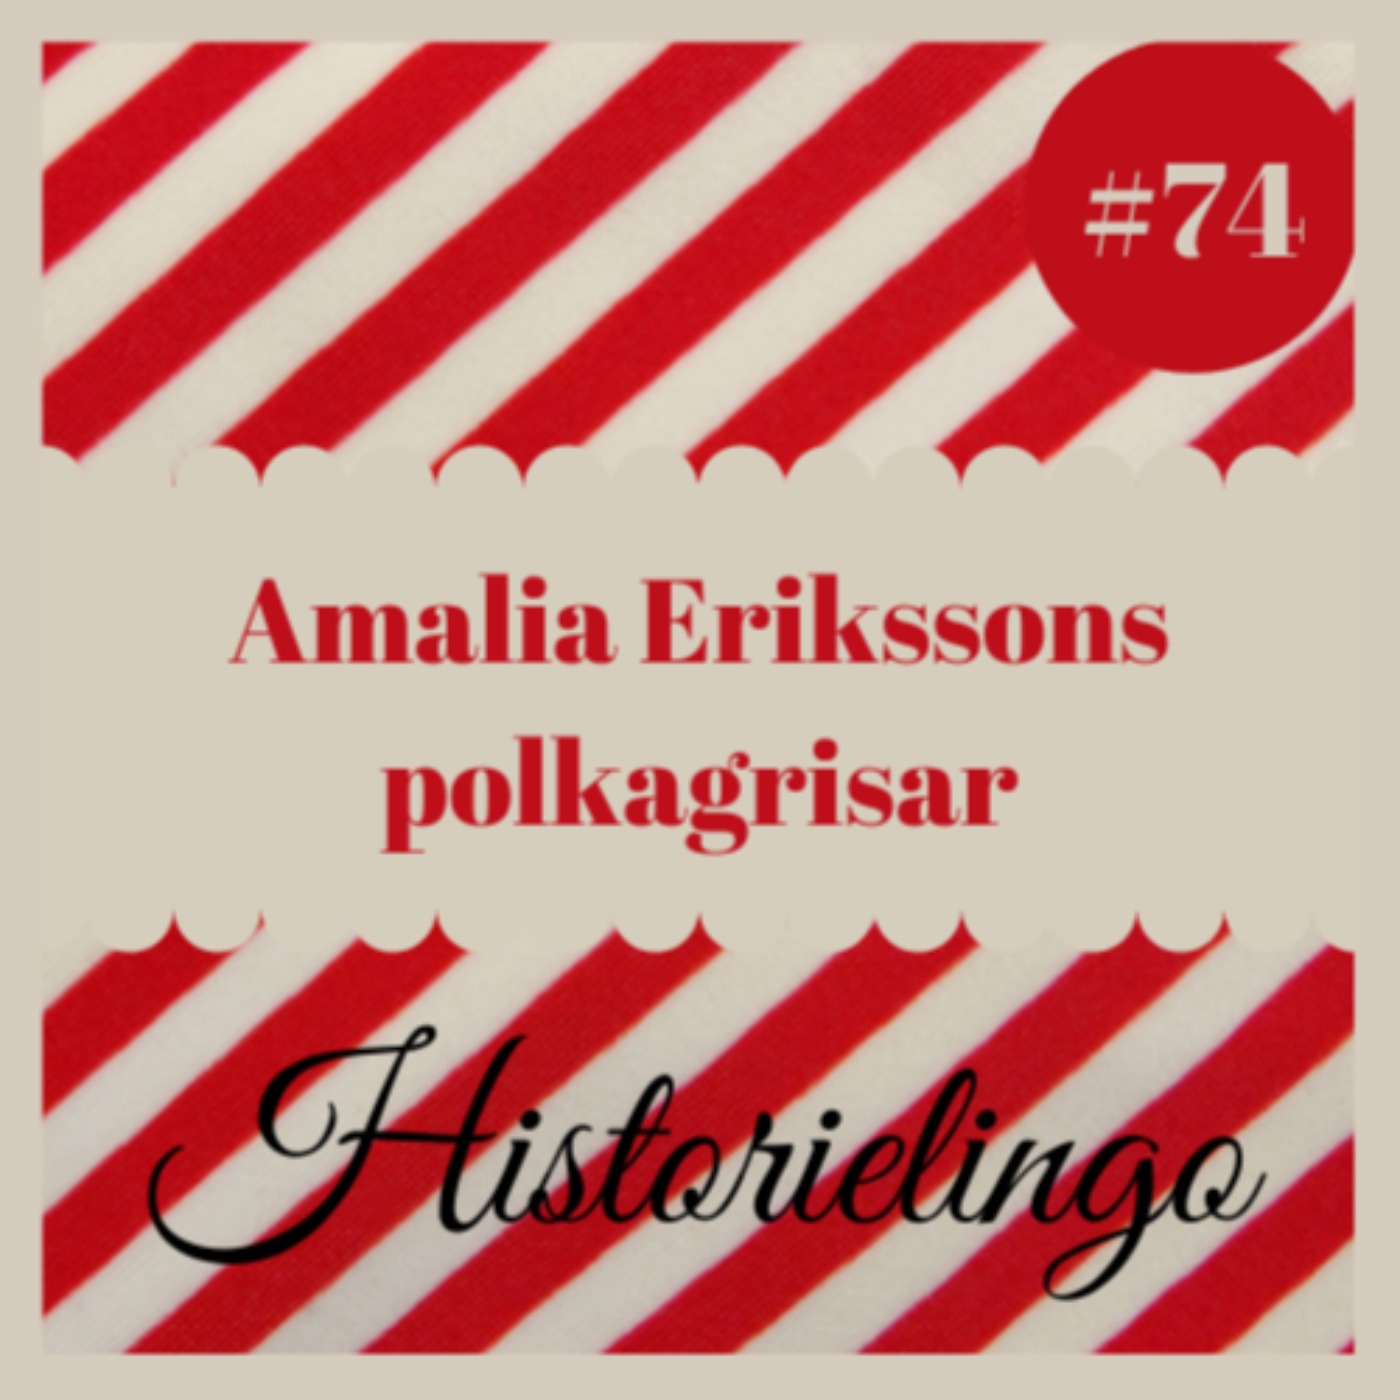 Avsnitt 74: Amalia Erikssons polkagrisar